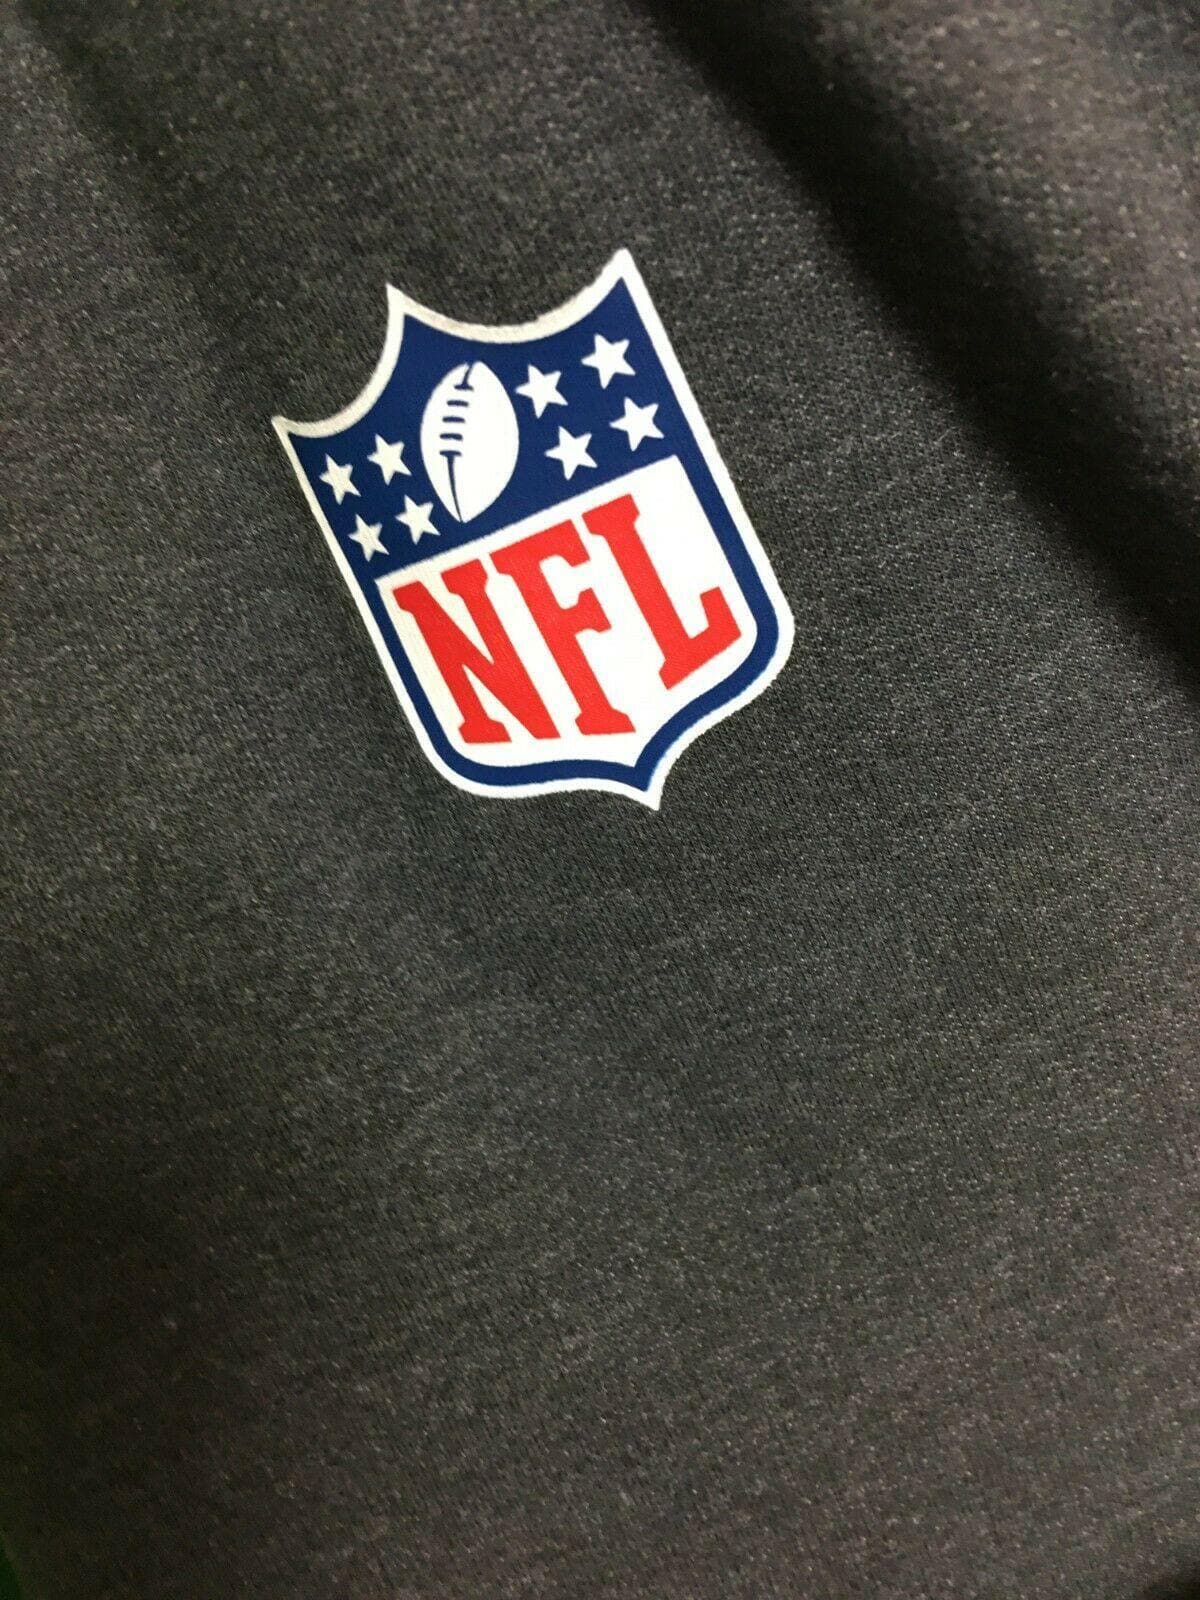 NFL Washington Commanders (Redskins) 1/4 Zip Pullover Men's Large